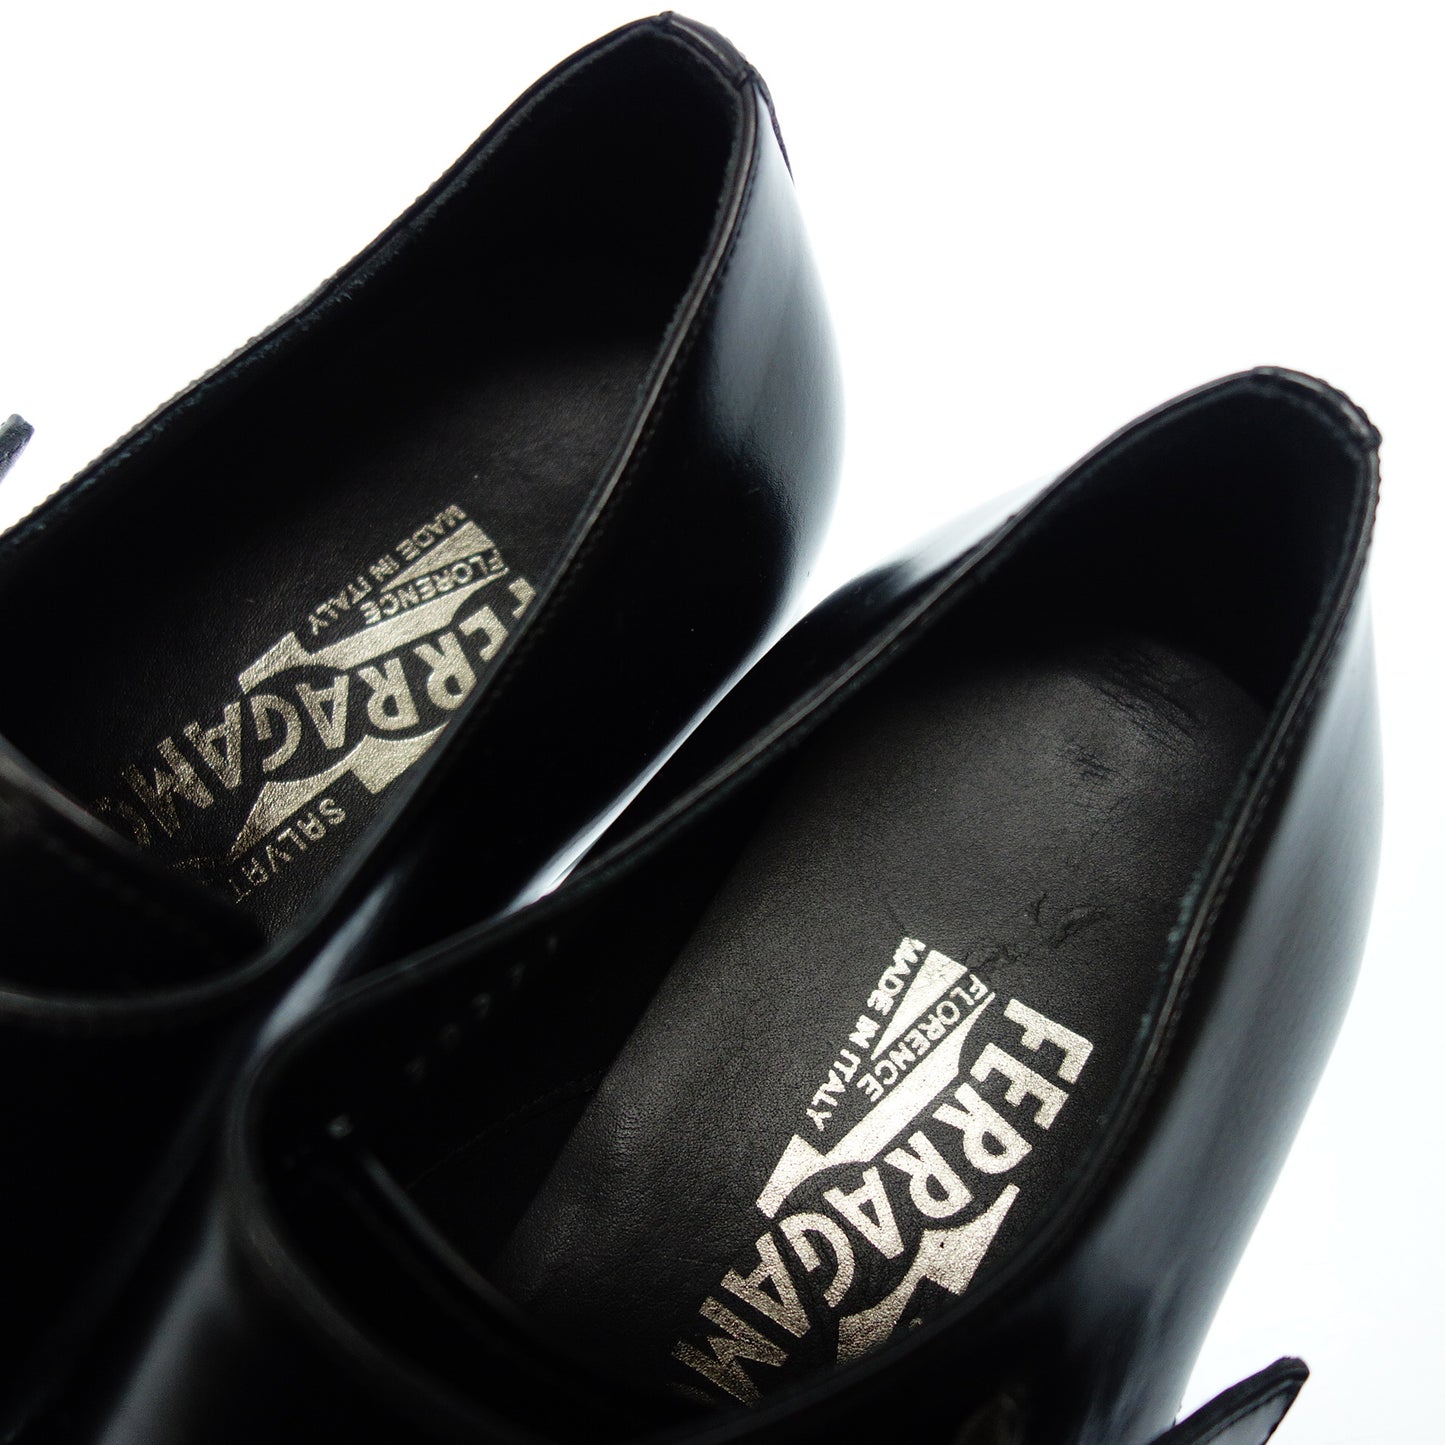 Salvatore Ferragamo leather shoes double monk men's 5.5 black Salvatore Ferragamo [AFC21] [Used] 